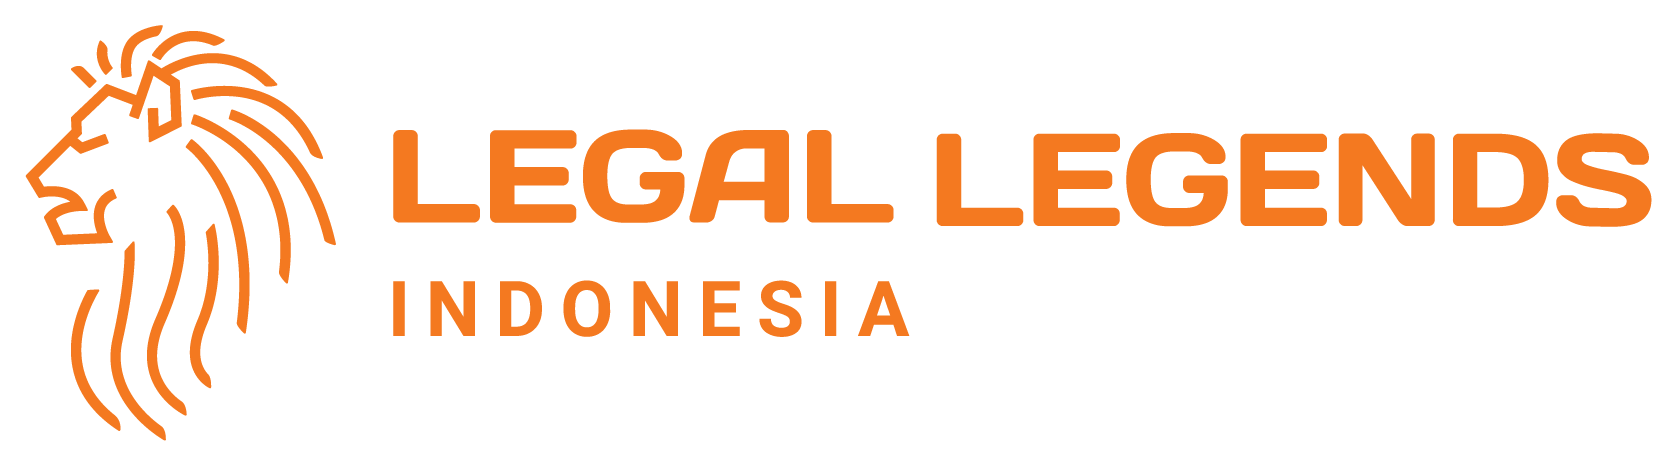 Legal Legends Indo 1